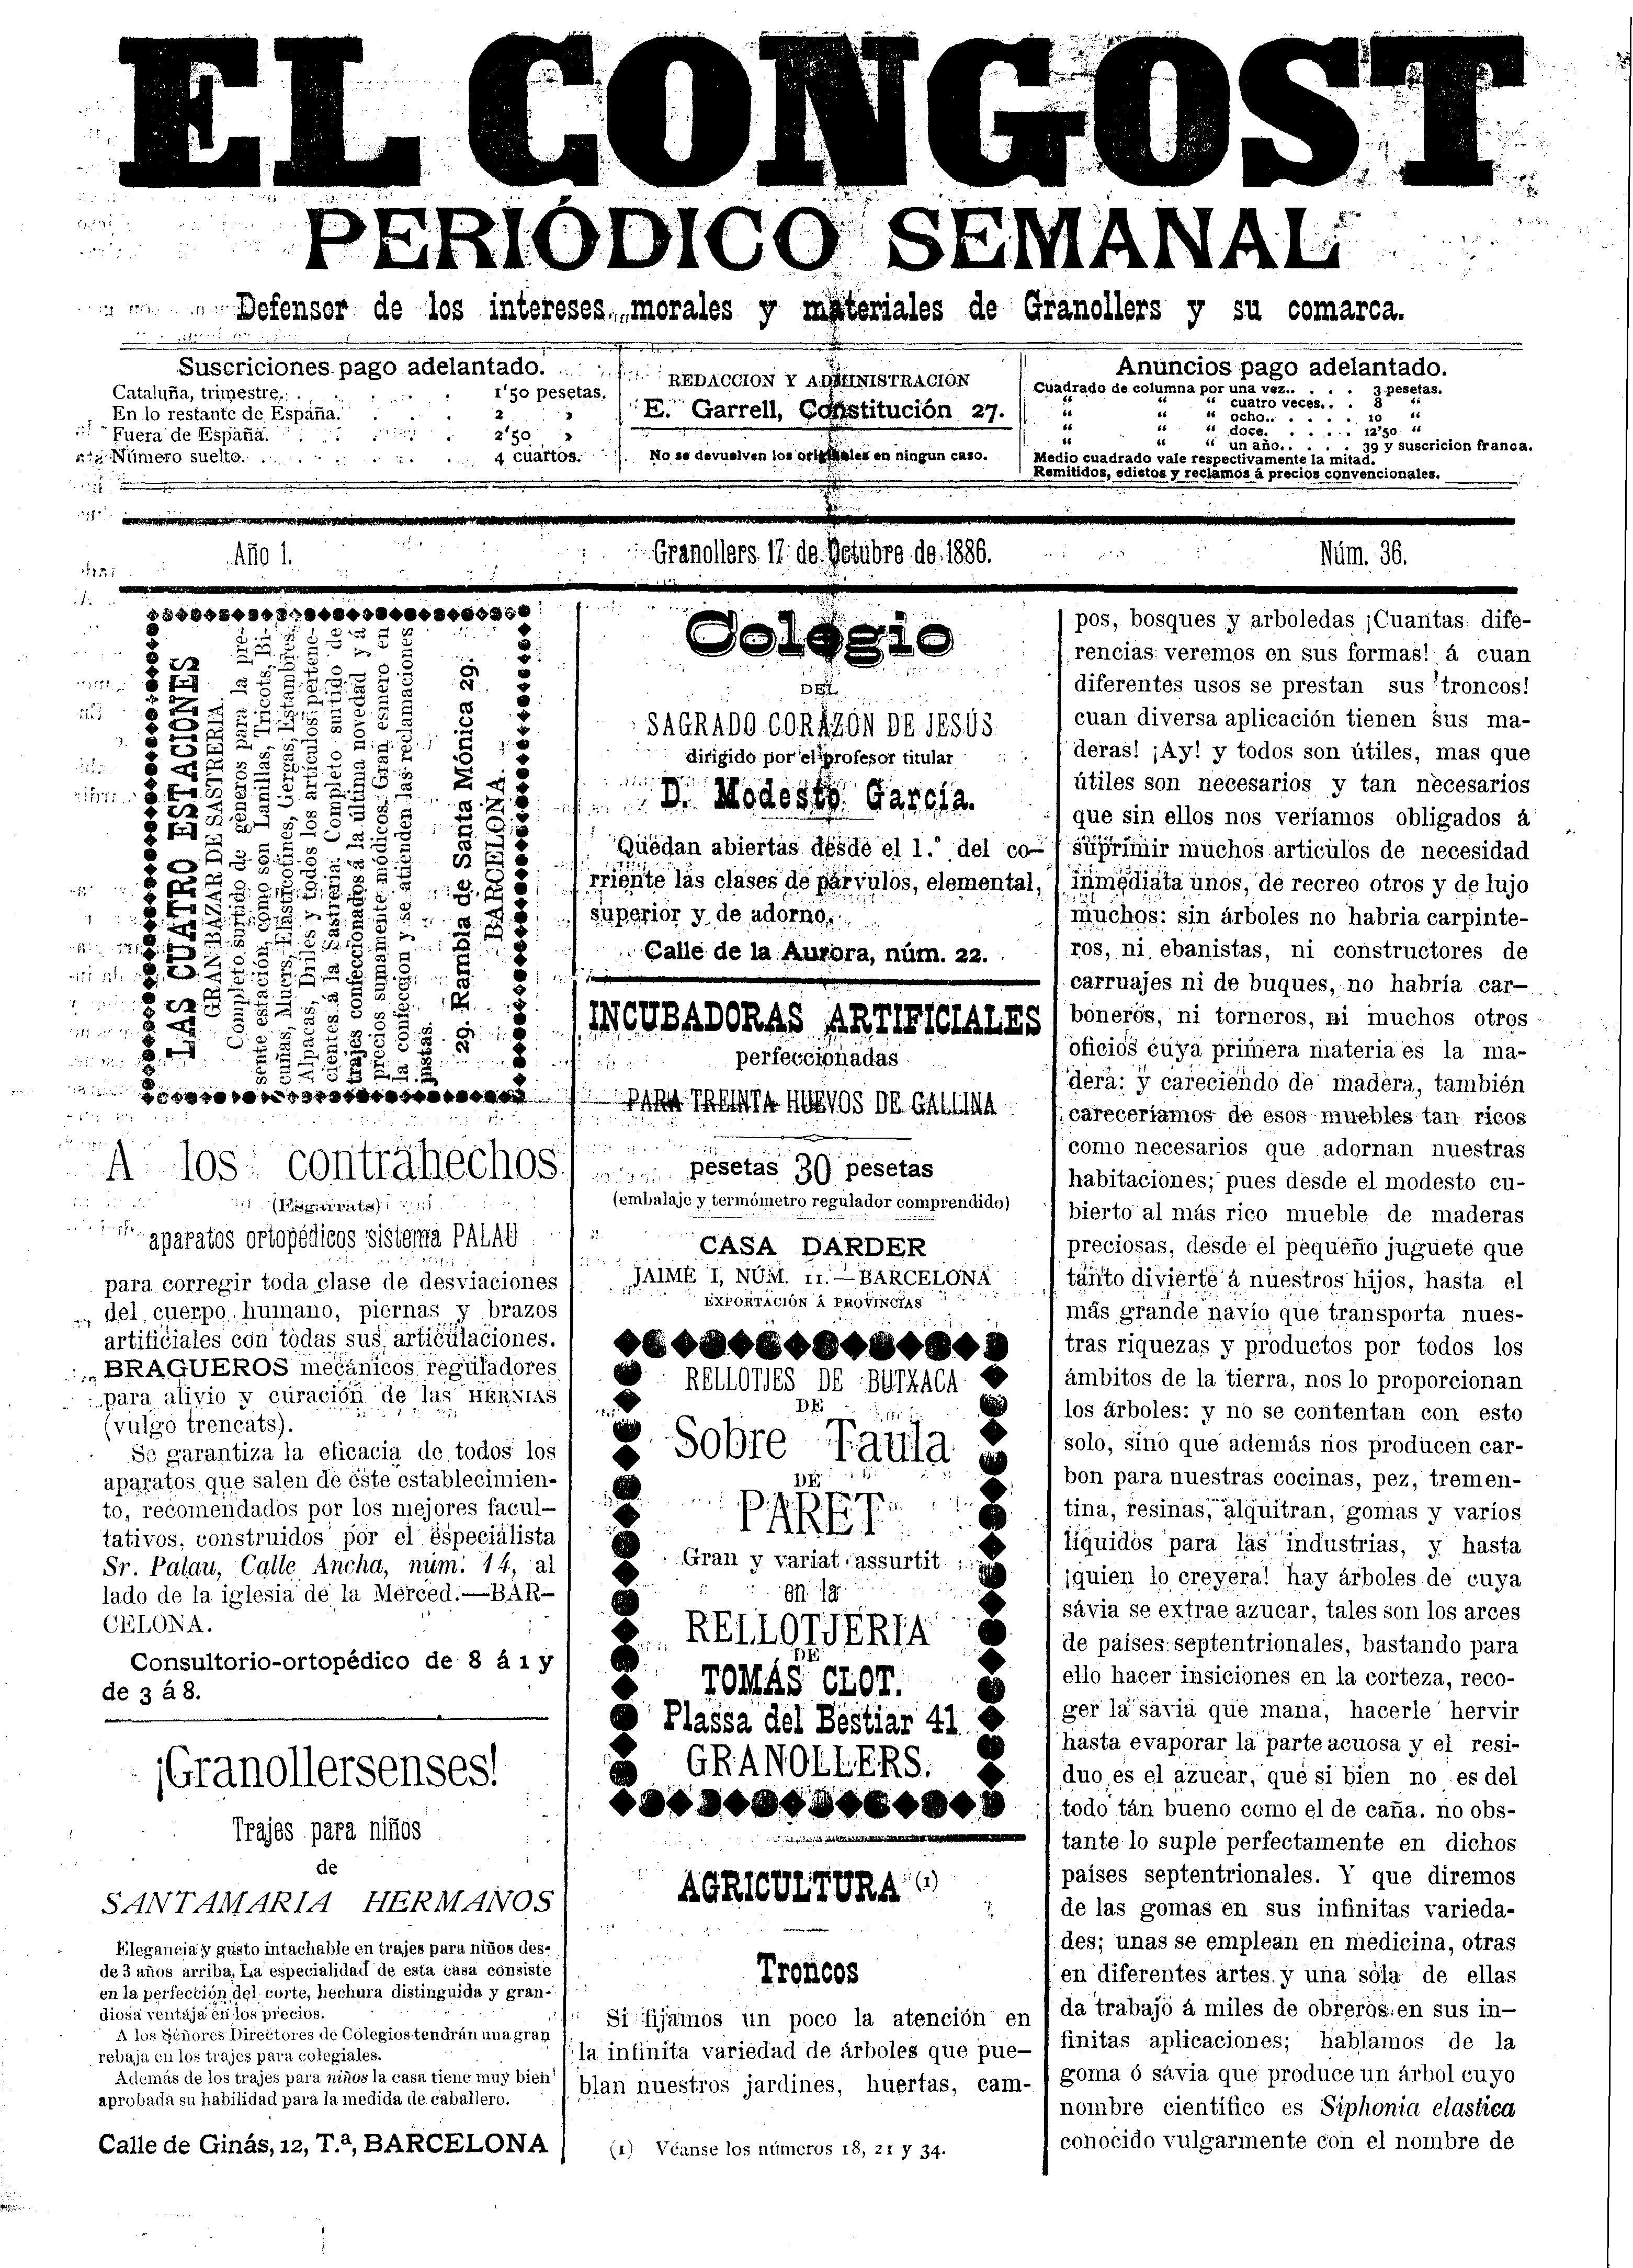 El Congost, 17/10/1886 [Exemplar]